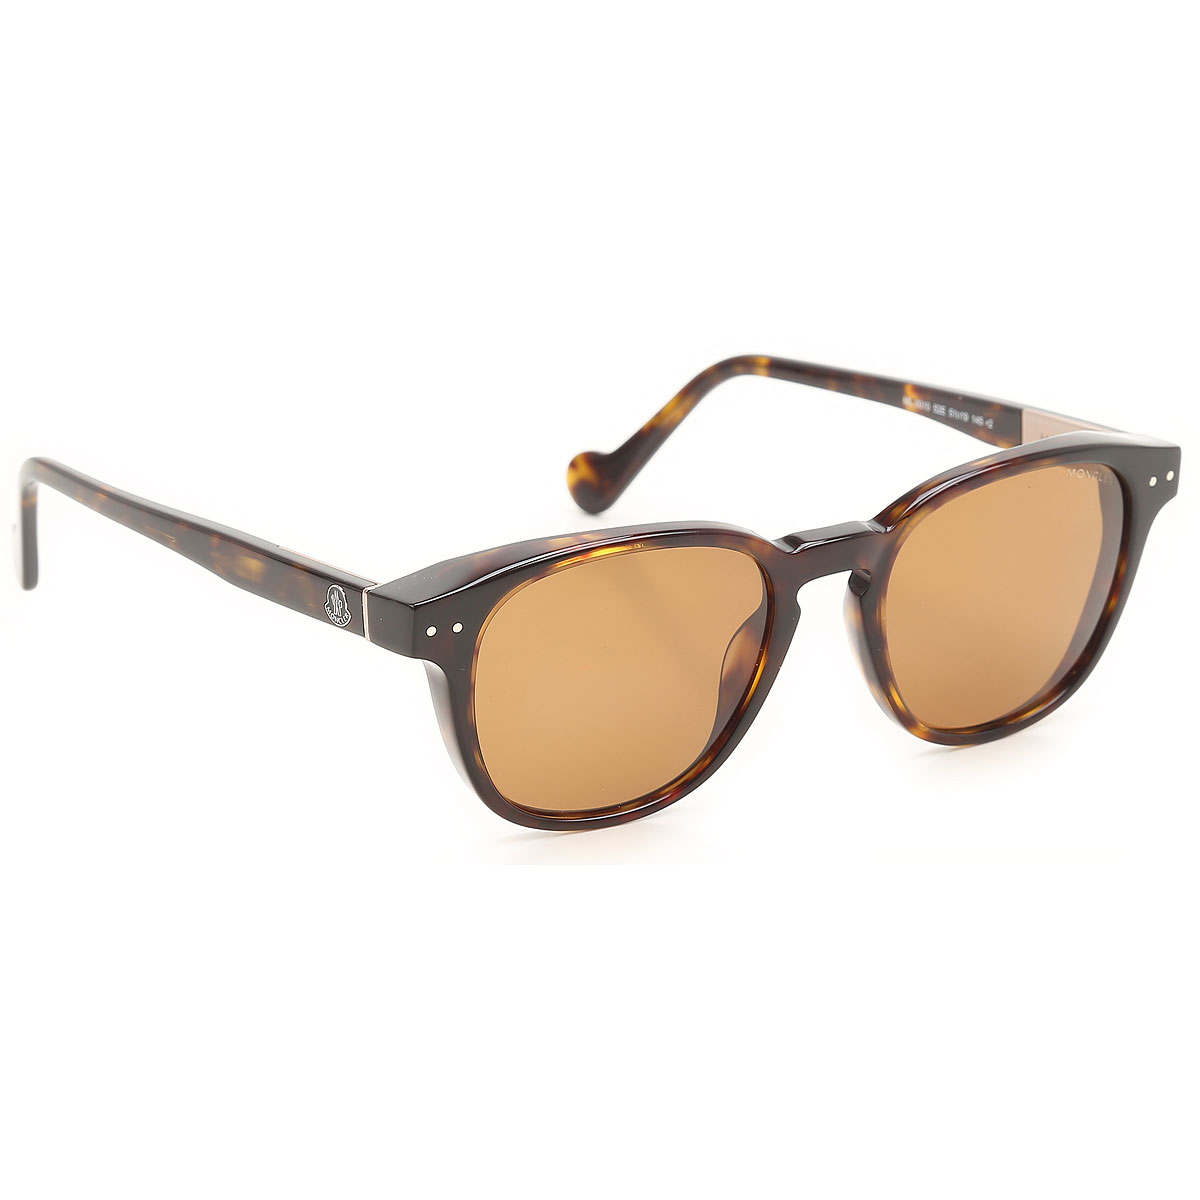 Sunglasses Moncler, Style code: ml0010-52e-N33